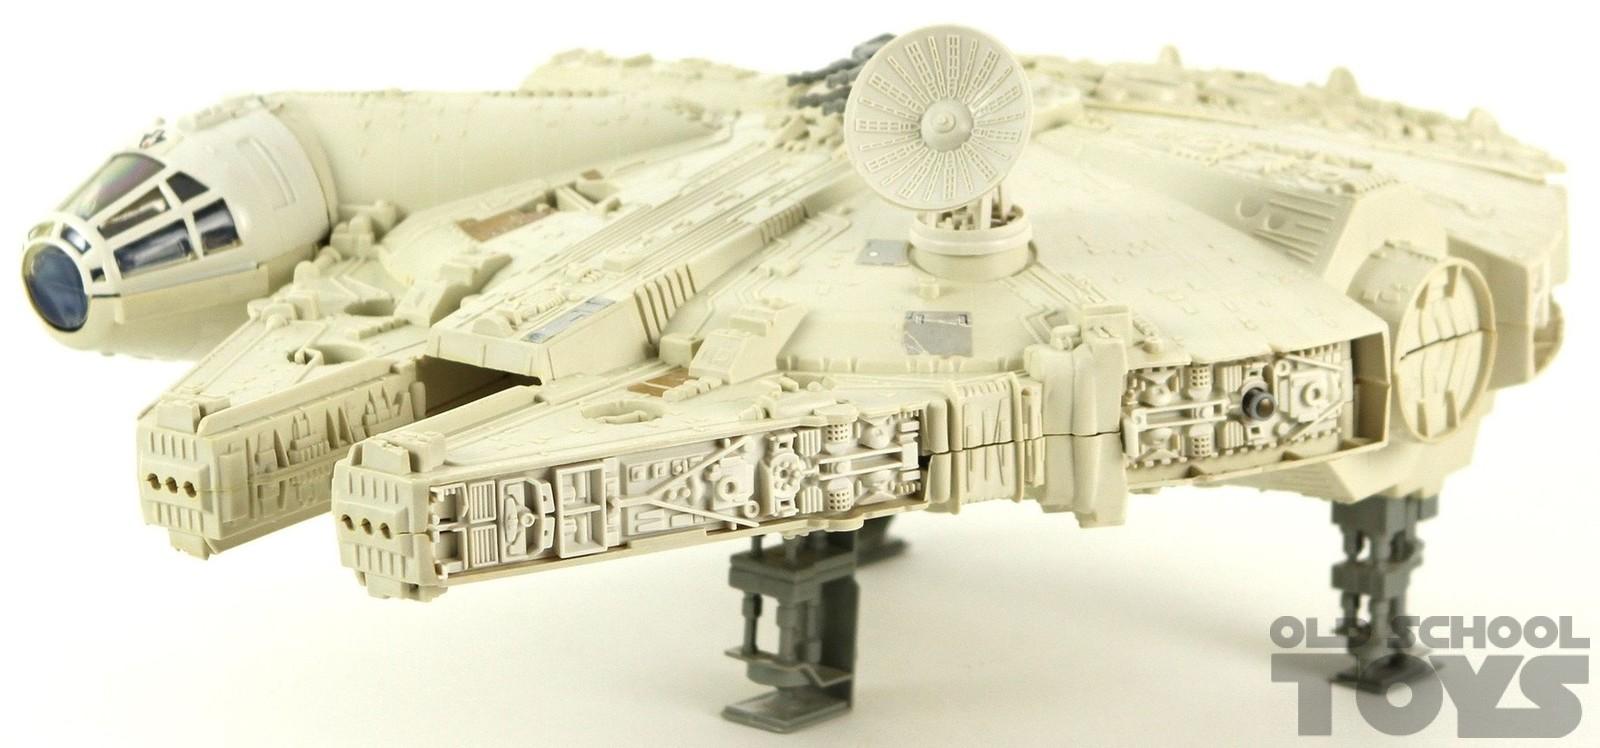 petticoat verbinding verbroken team Star Wars vintage Millennium Falcon compleet | Old School Toys